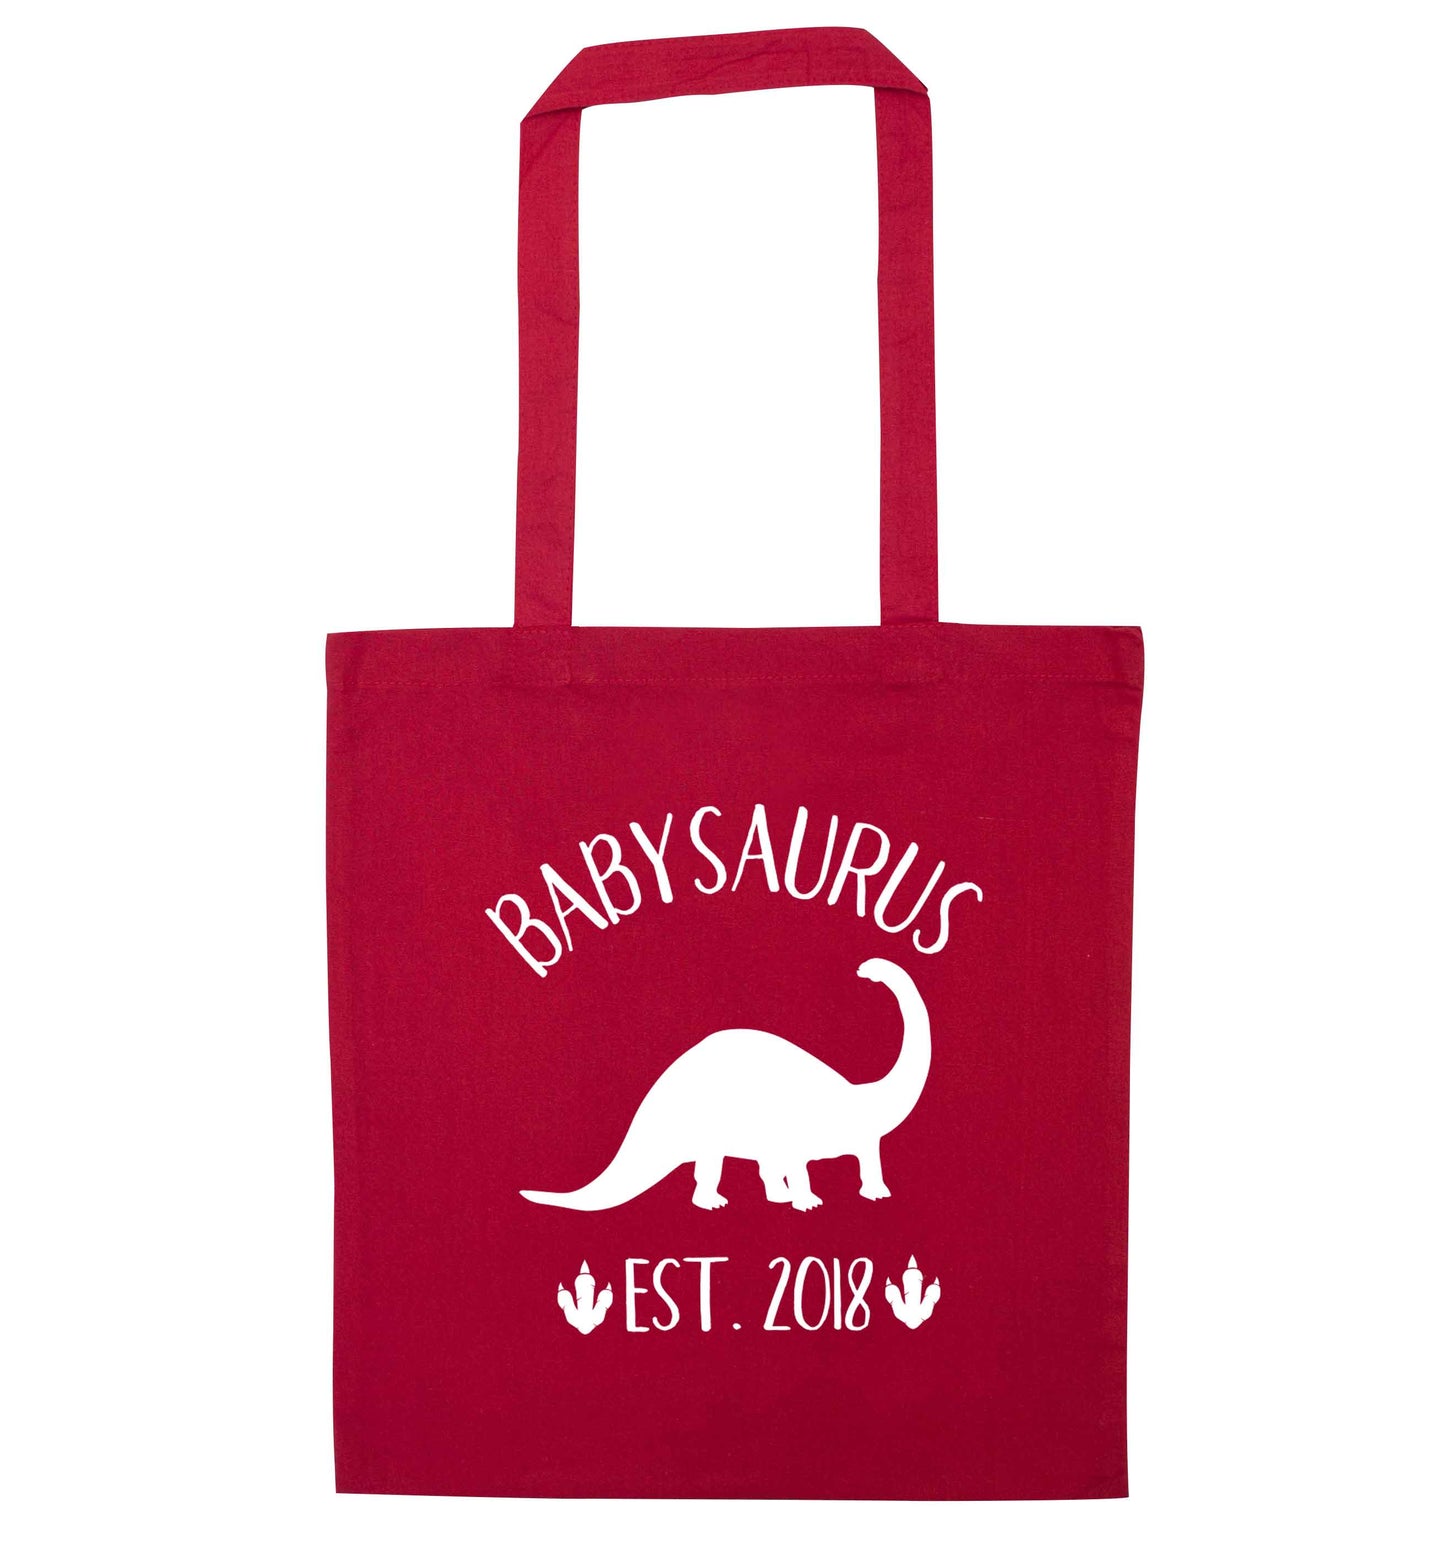 Personalised babysaurus since (custom date) red tote bag